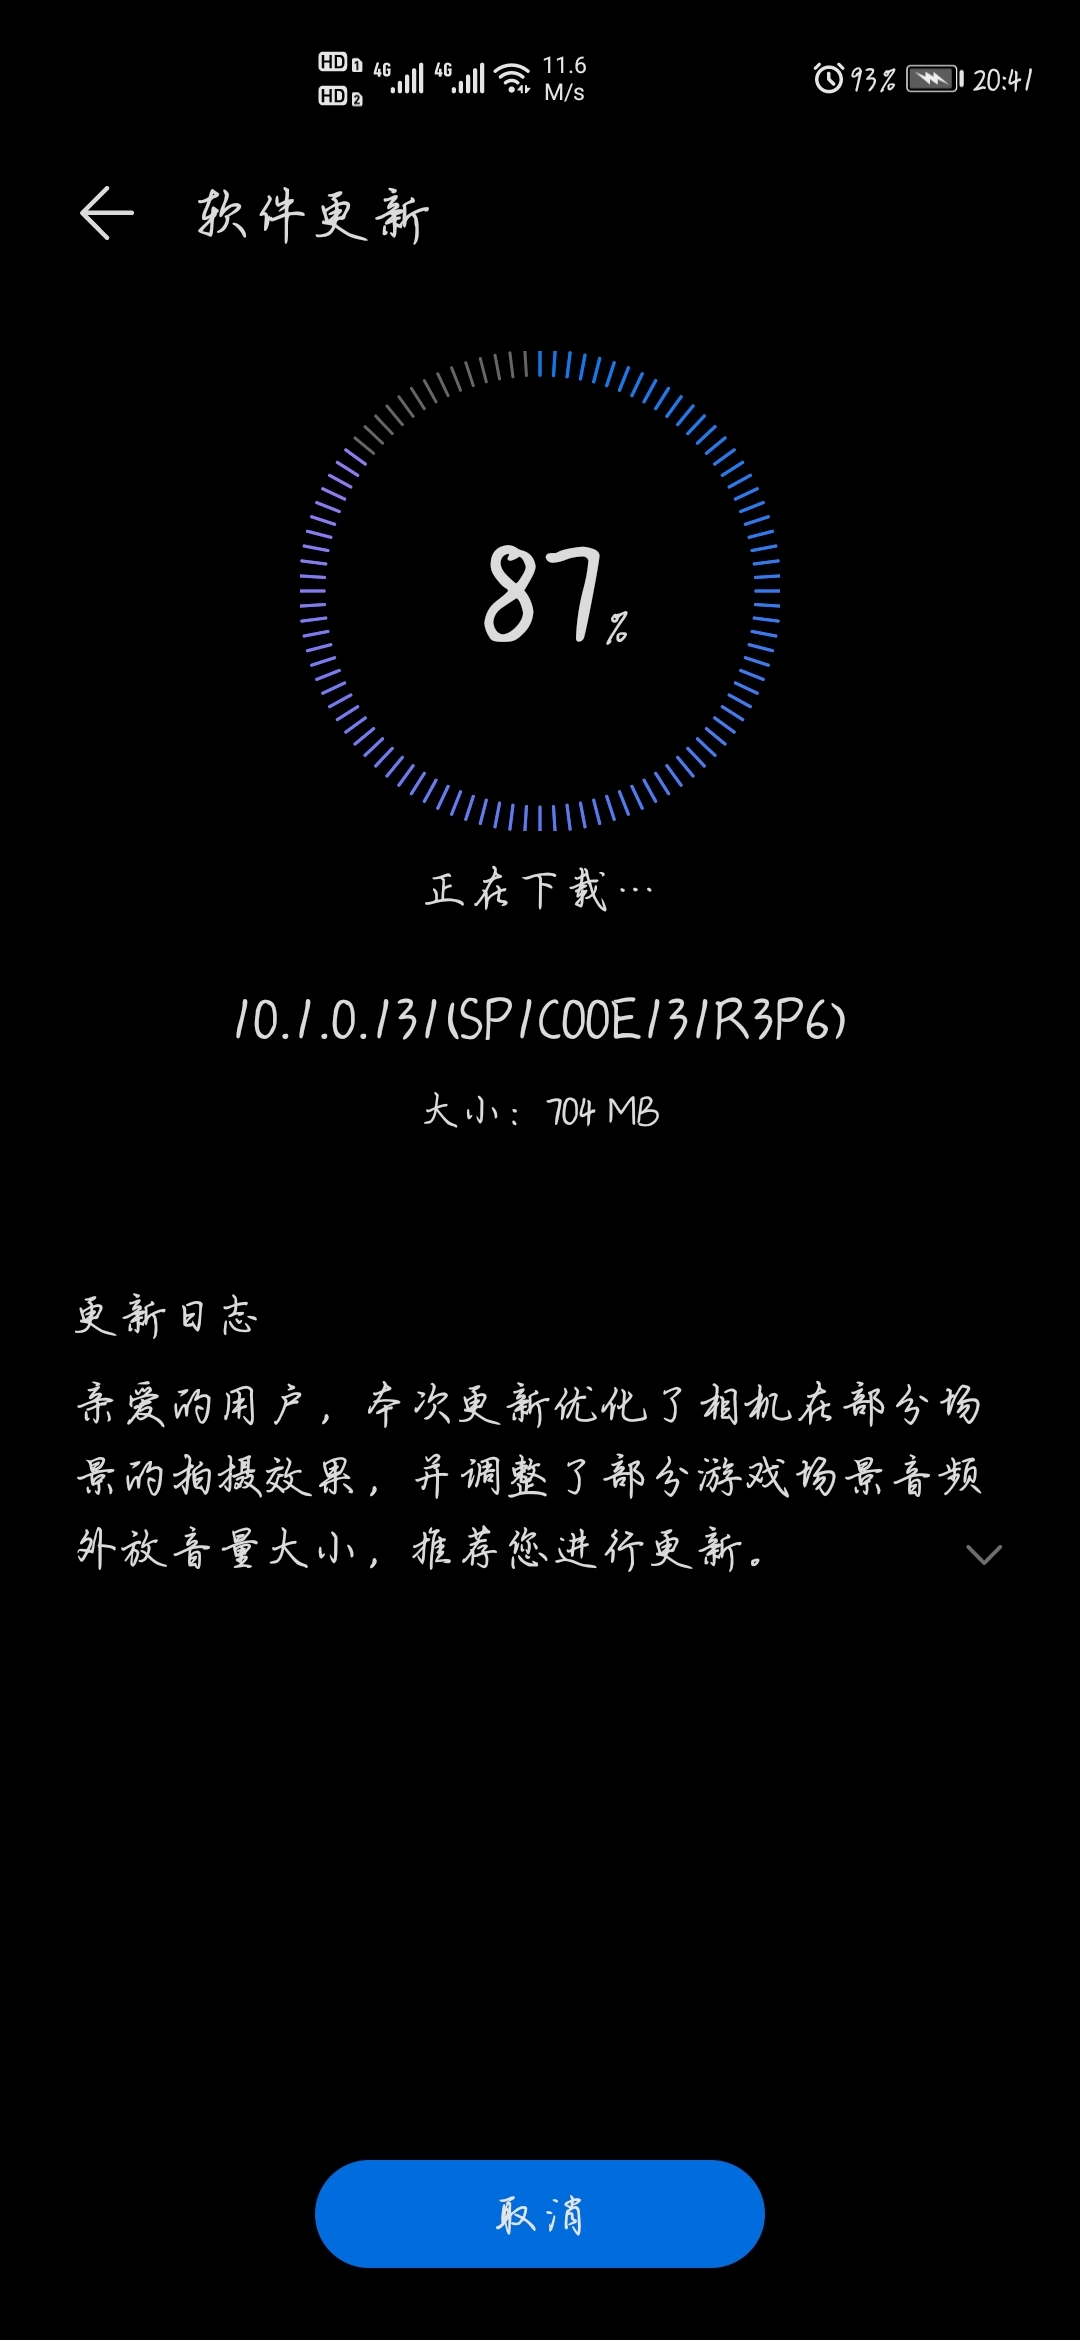 Huawei P40 EMUI 10.1.0.131